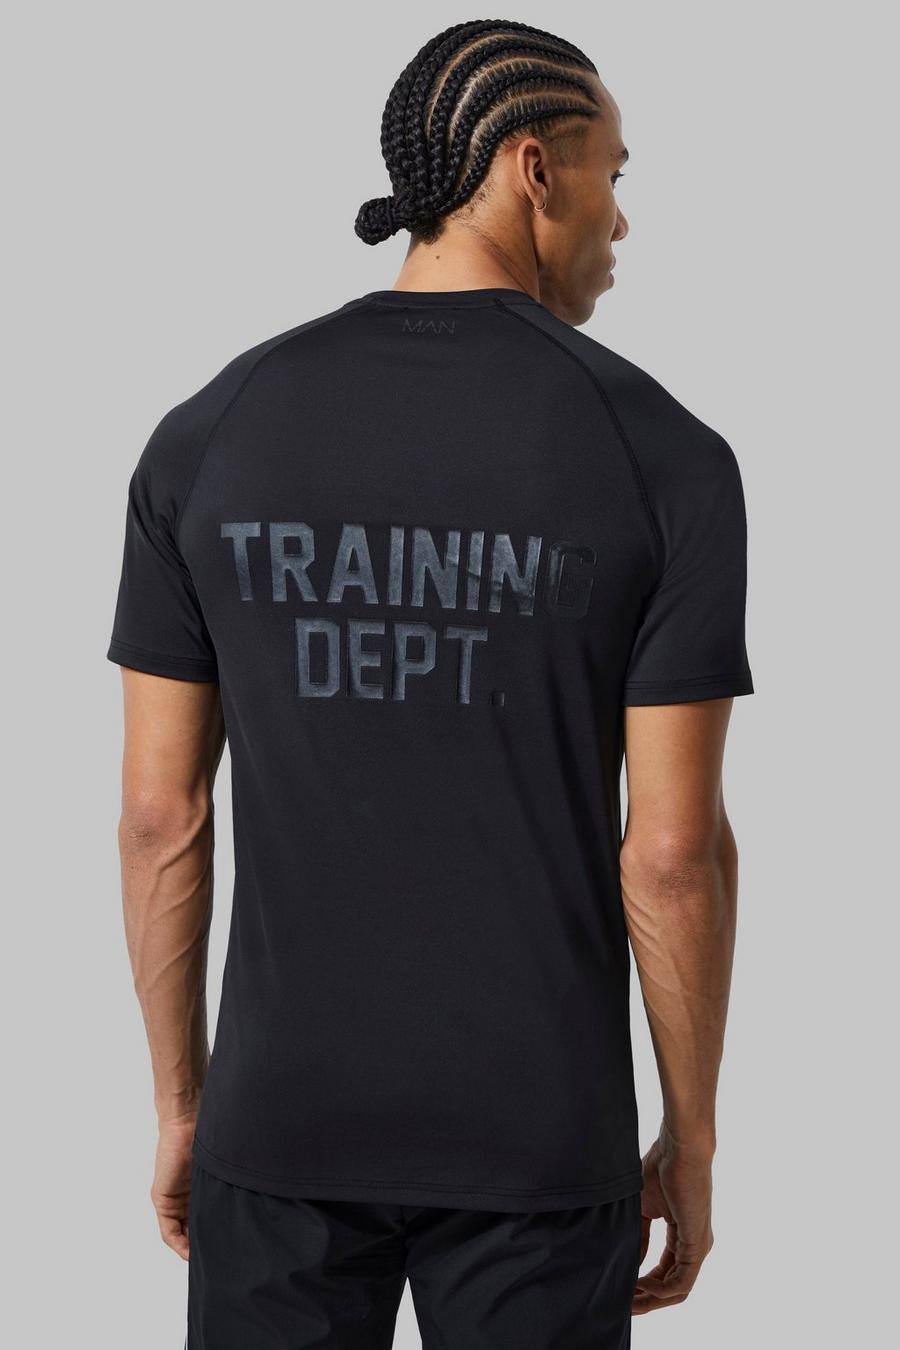 T-shirt attillata Tall Man Active Training Dept, Black nero image number 1